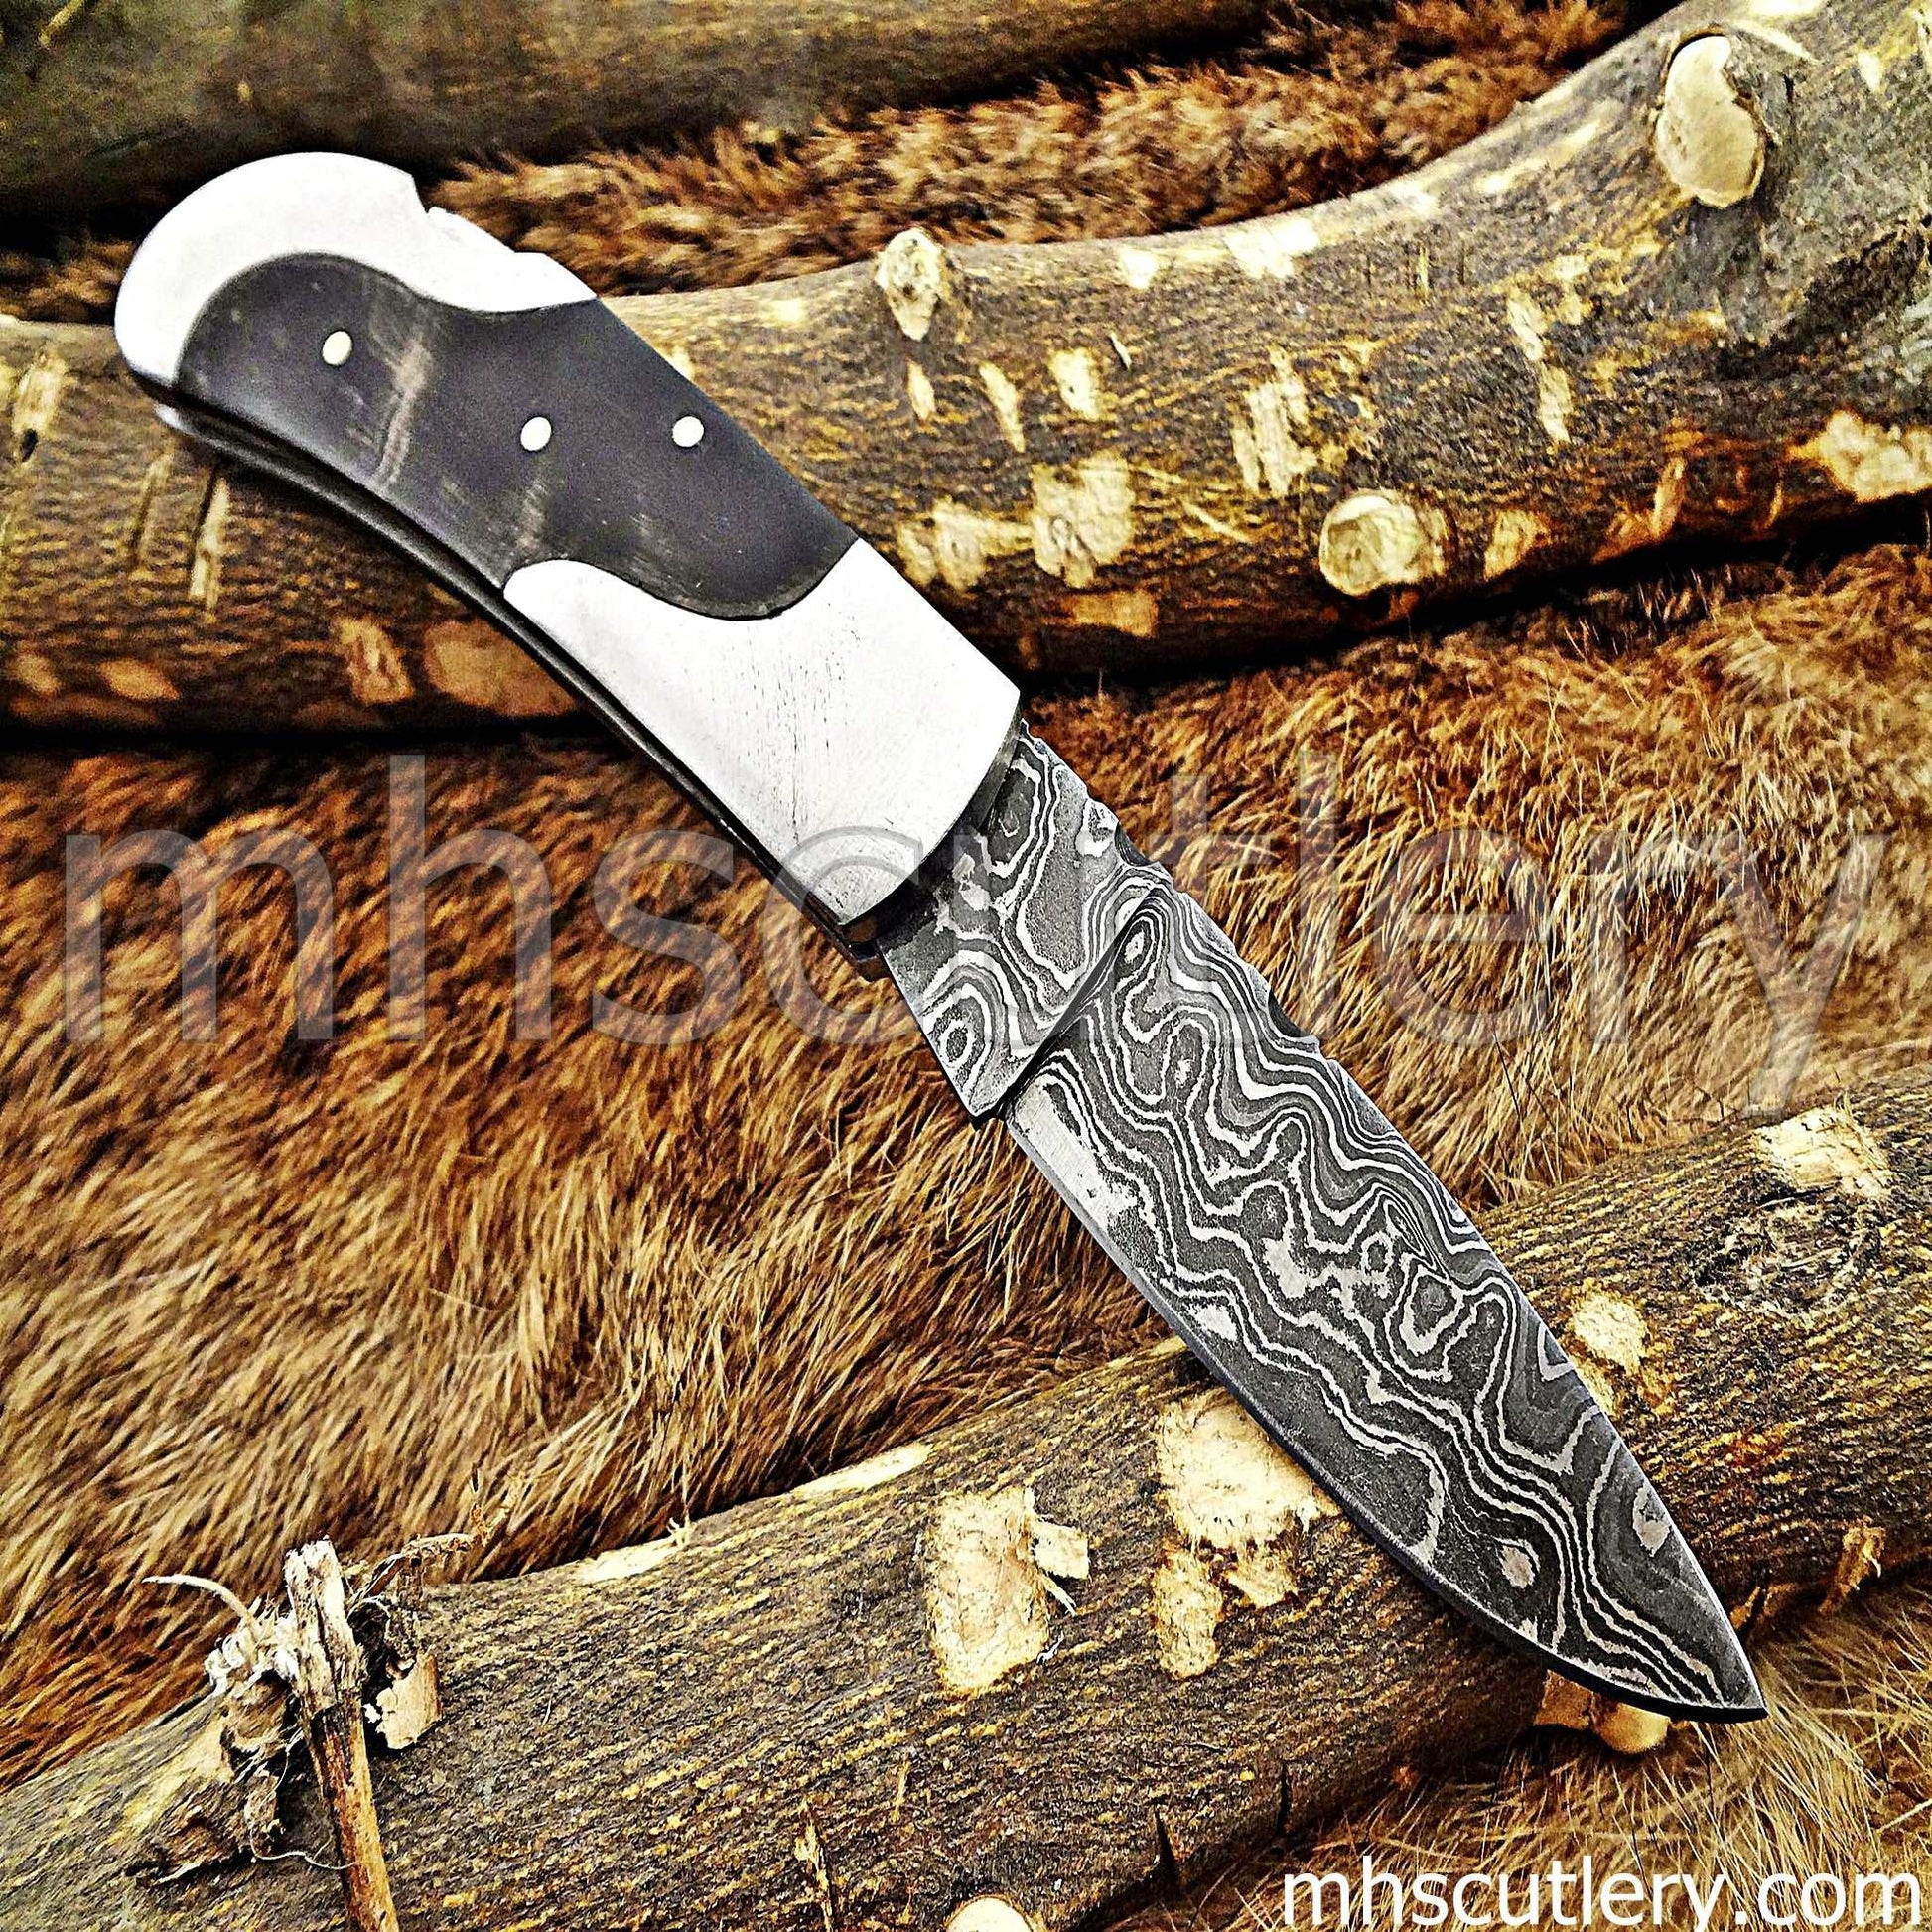 Custom Hand Forged Damascus Steel Pocket EDC Knife | mhscutlery